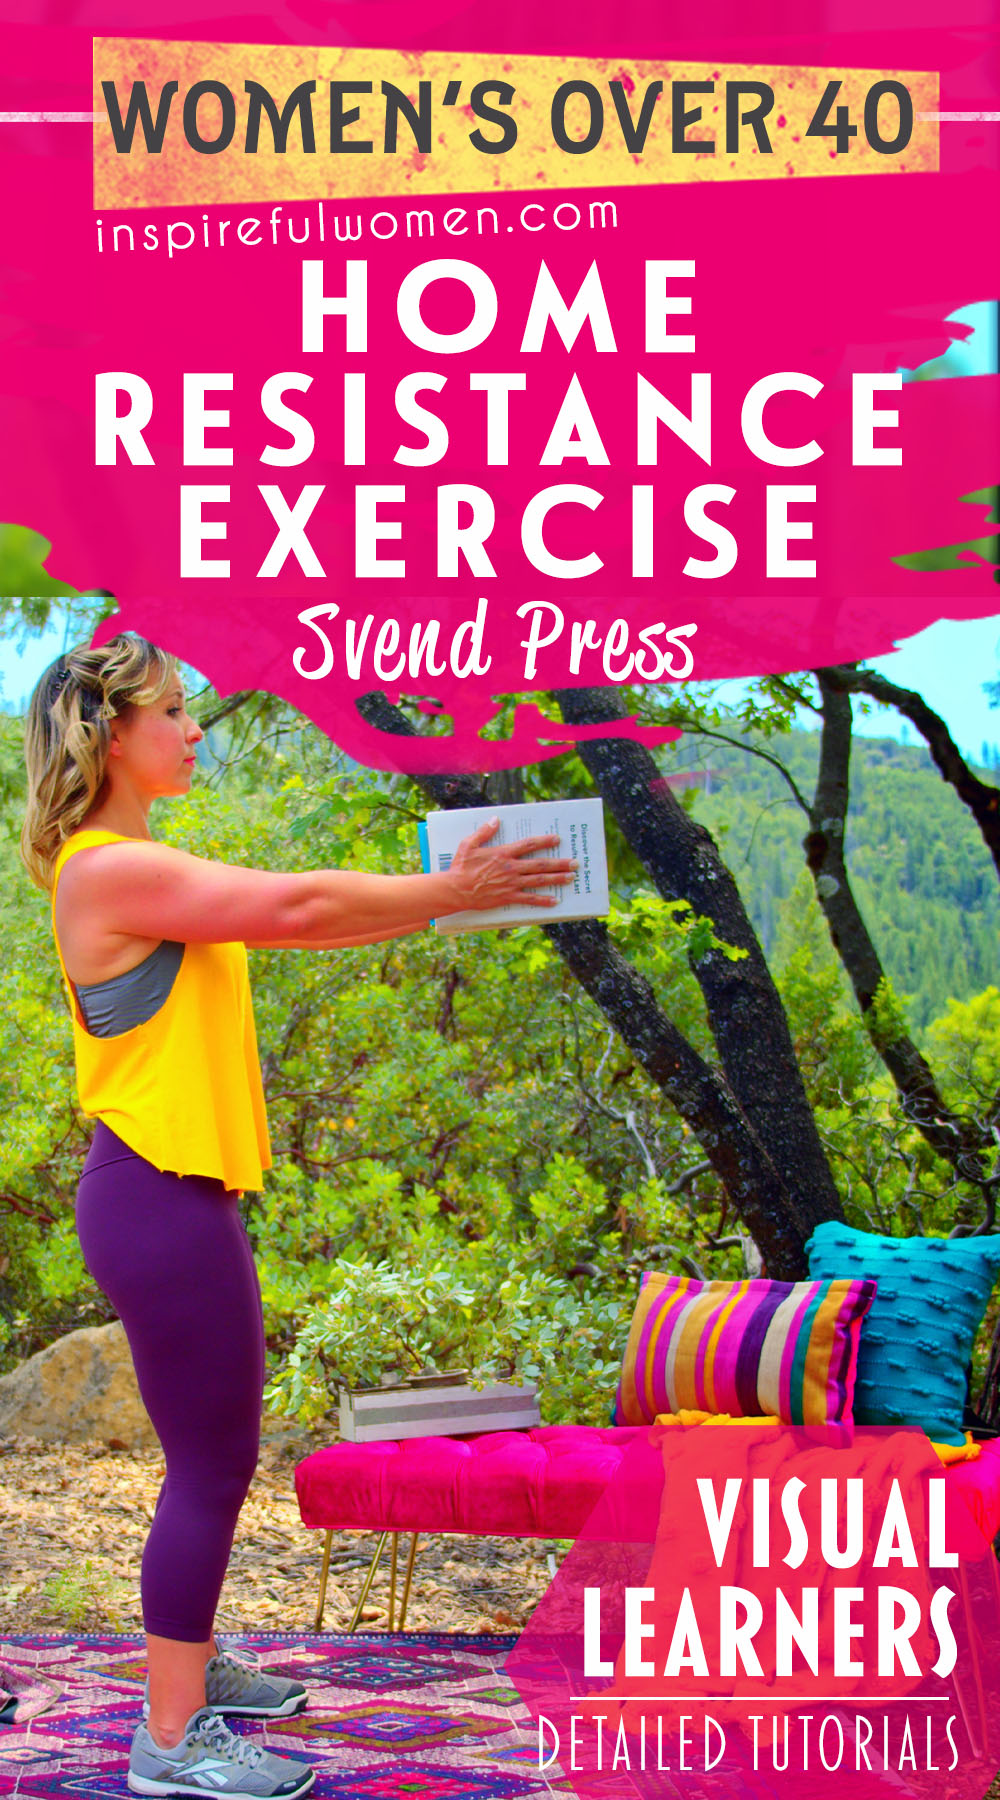 svend-press-pectoralis-major-chest-exercise-books-dumbbells-home-workout-women-above-40